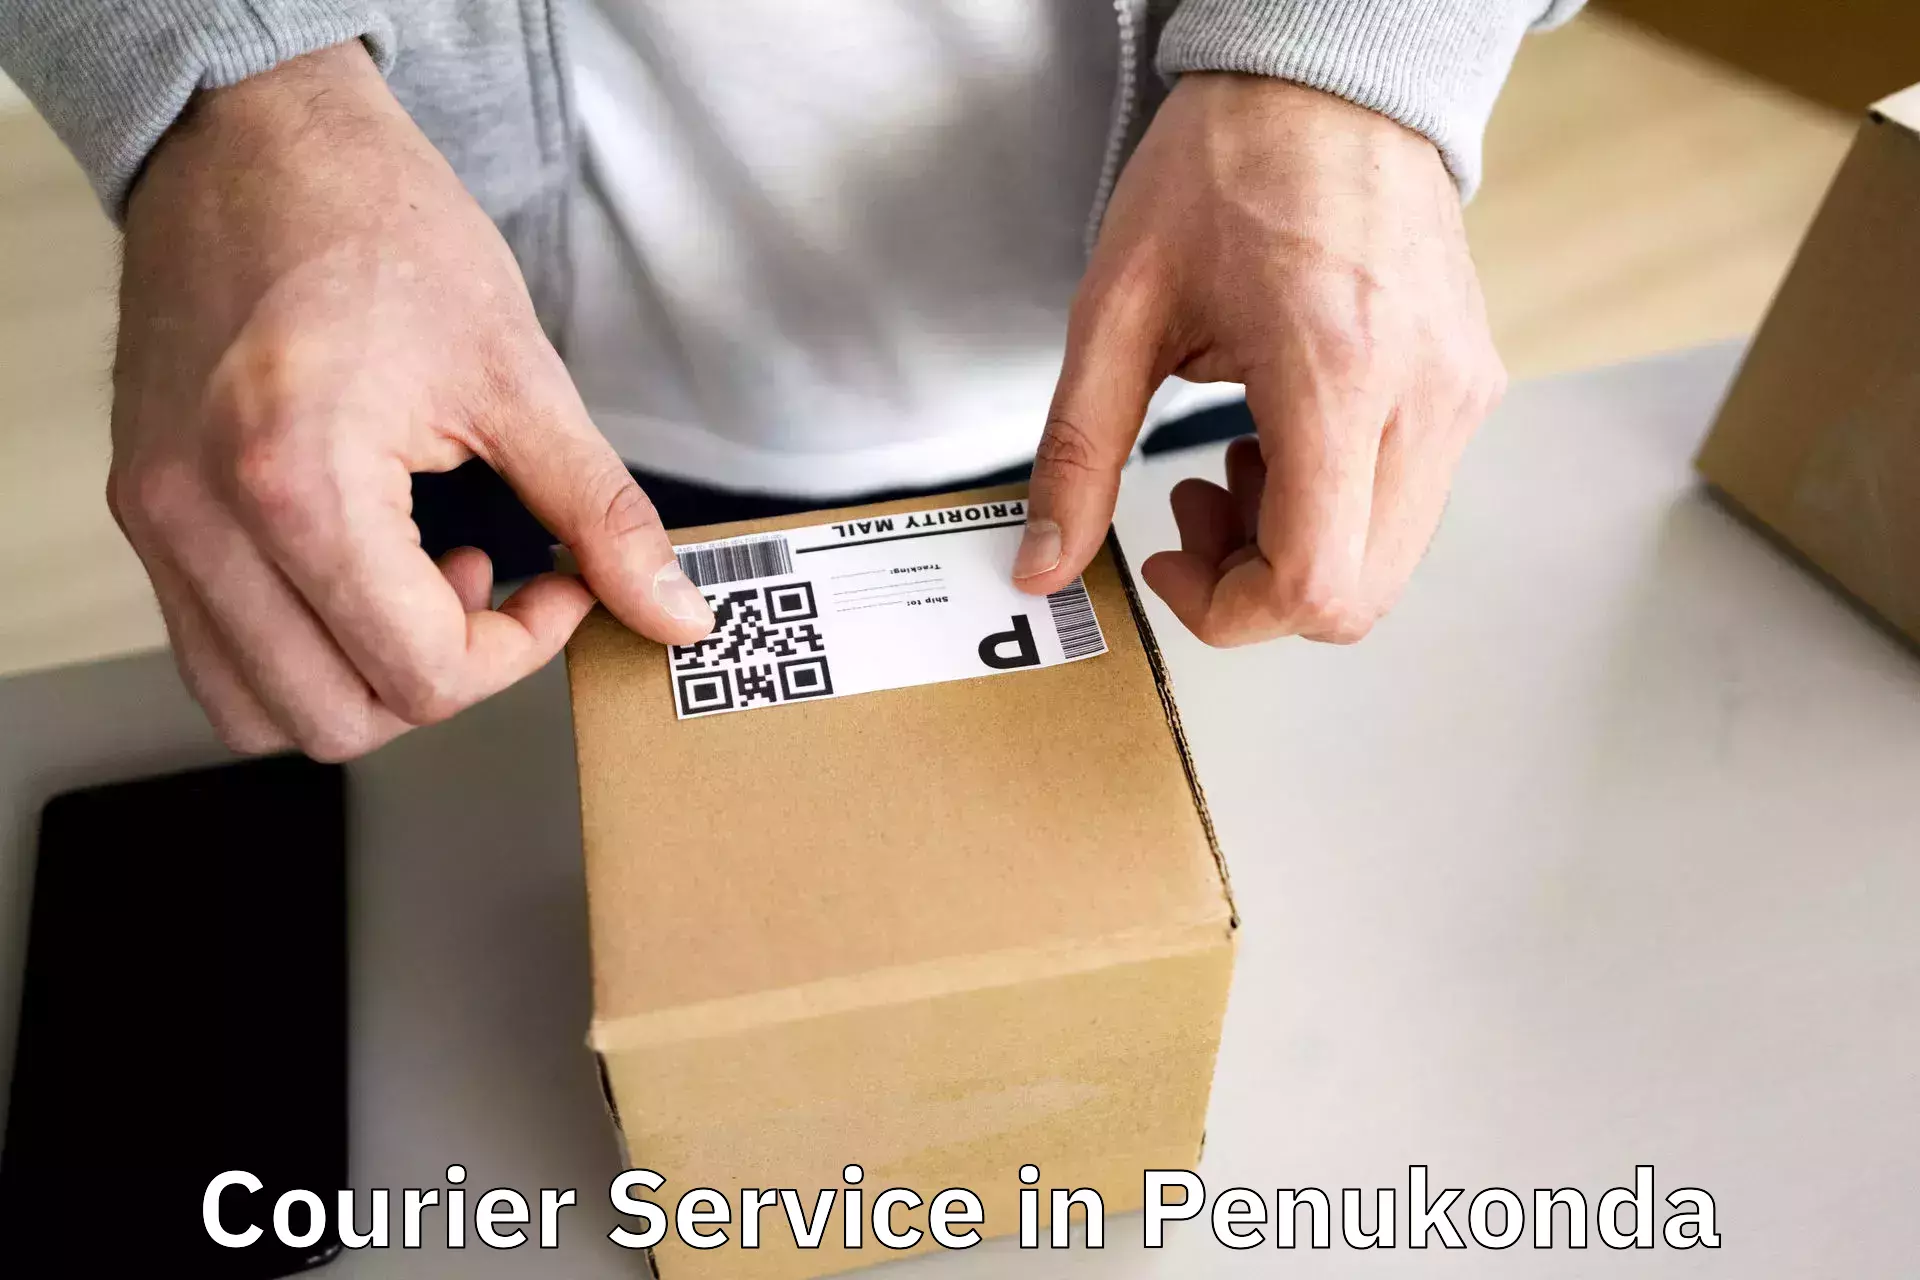 Personal parcel delivery in Penukonda